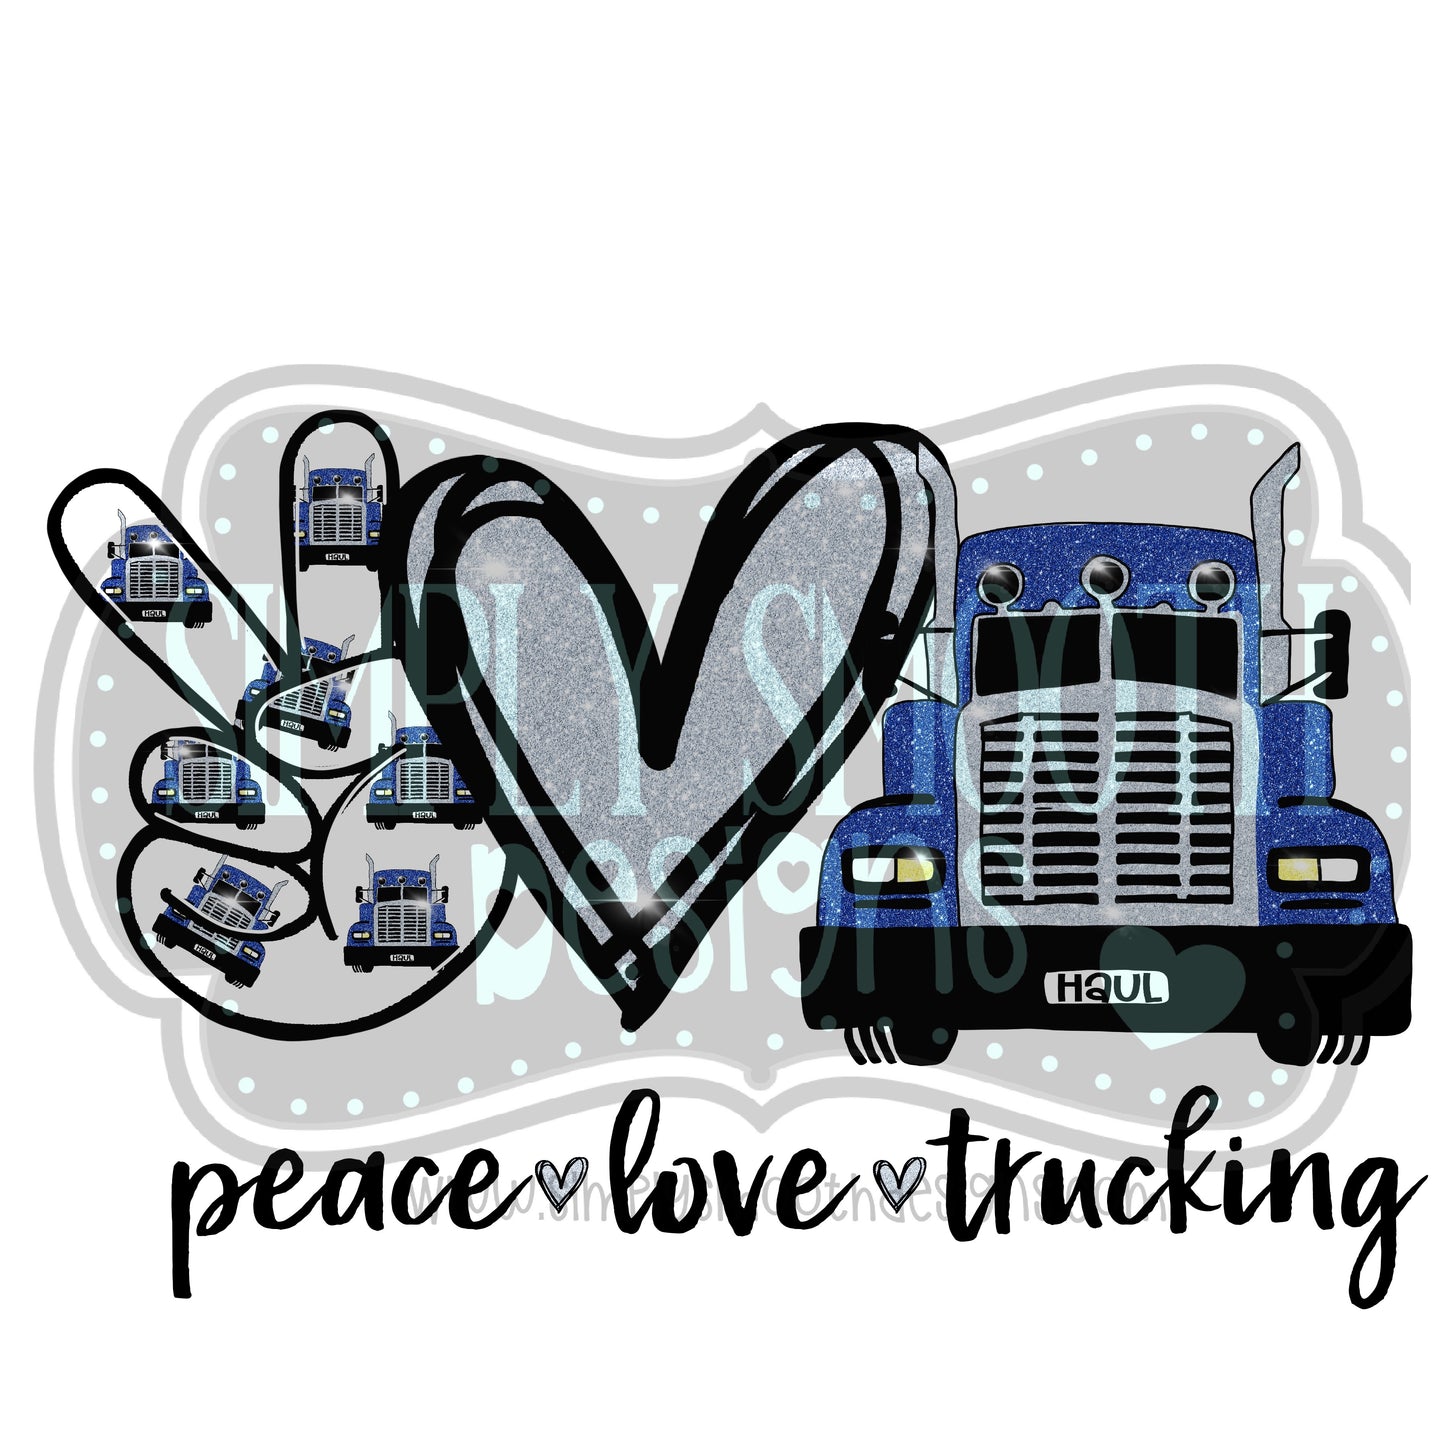 Peace love trucking